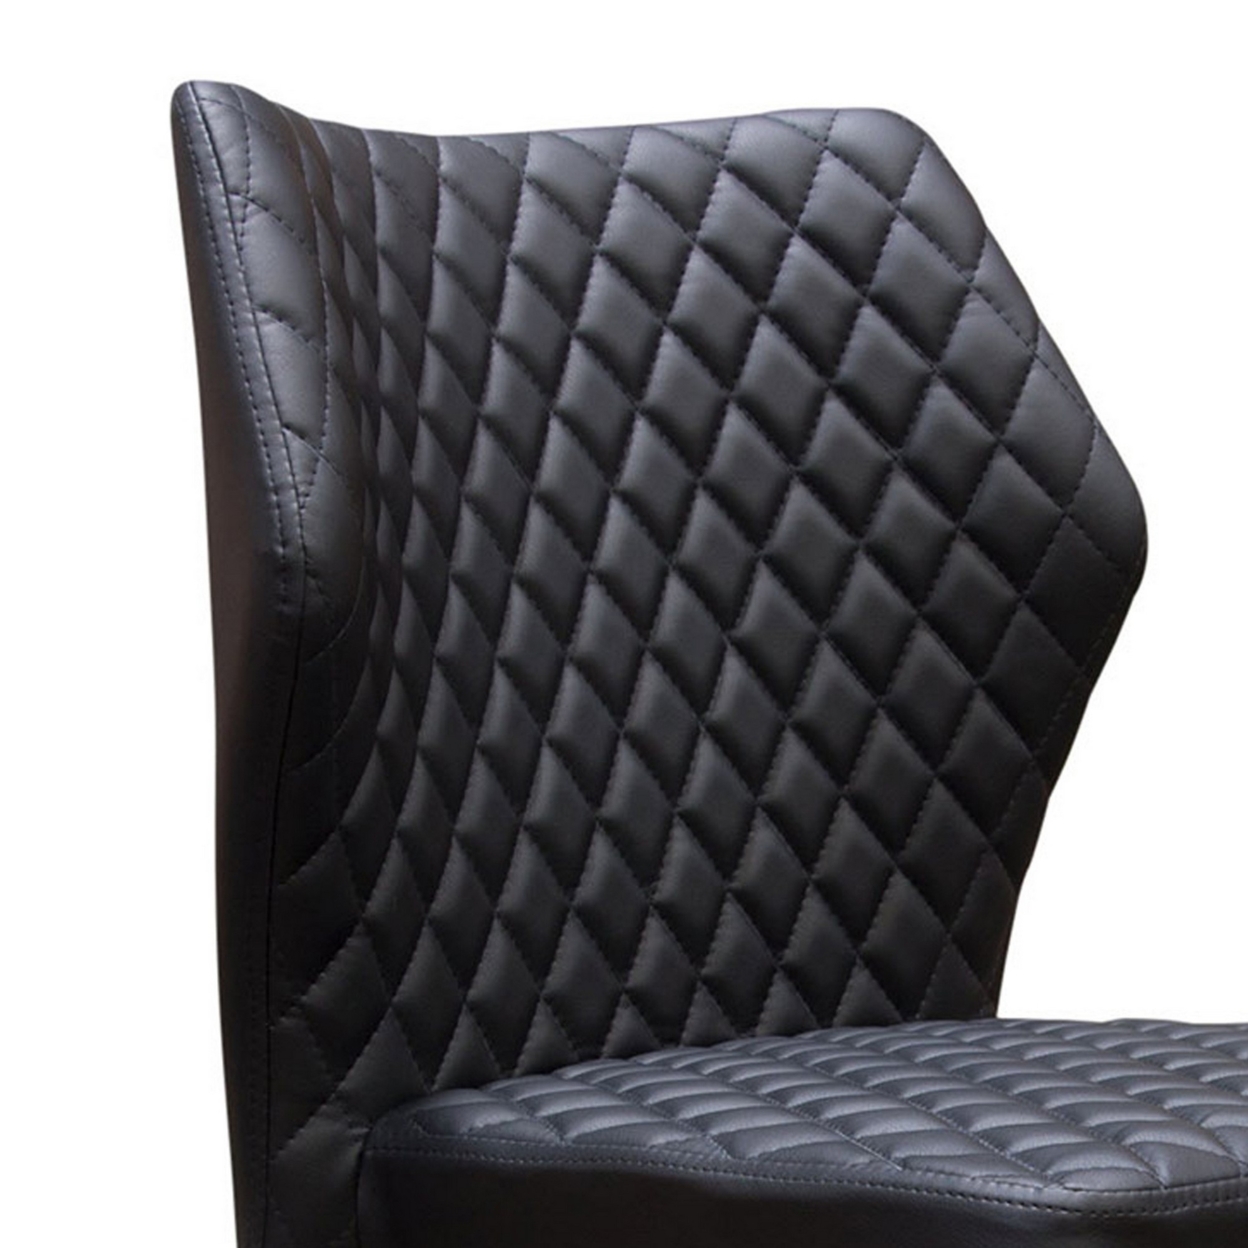 Diamond Tufted Leatherette Dining Chair With Metal Legs, Black, Set Of Four- Saltoro Sherpi